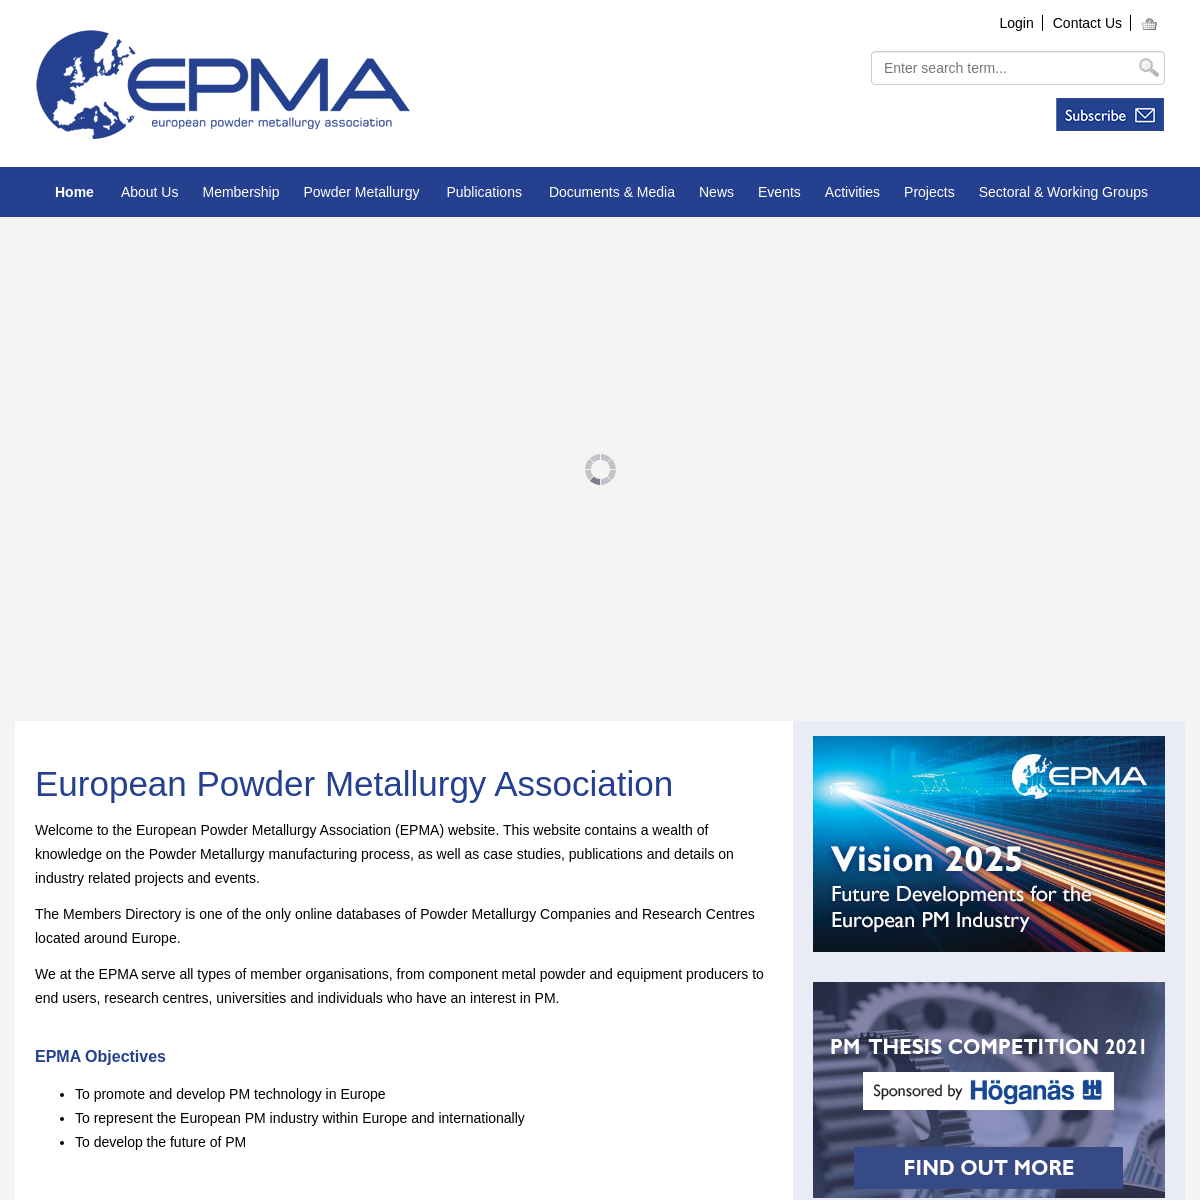 A complete backup of epma.com